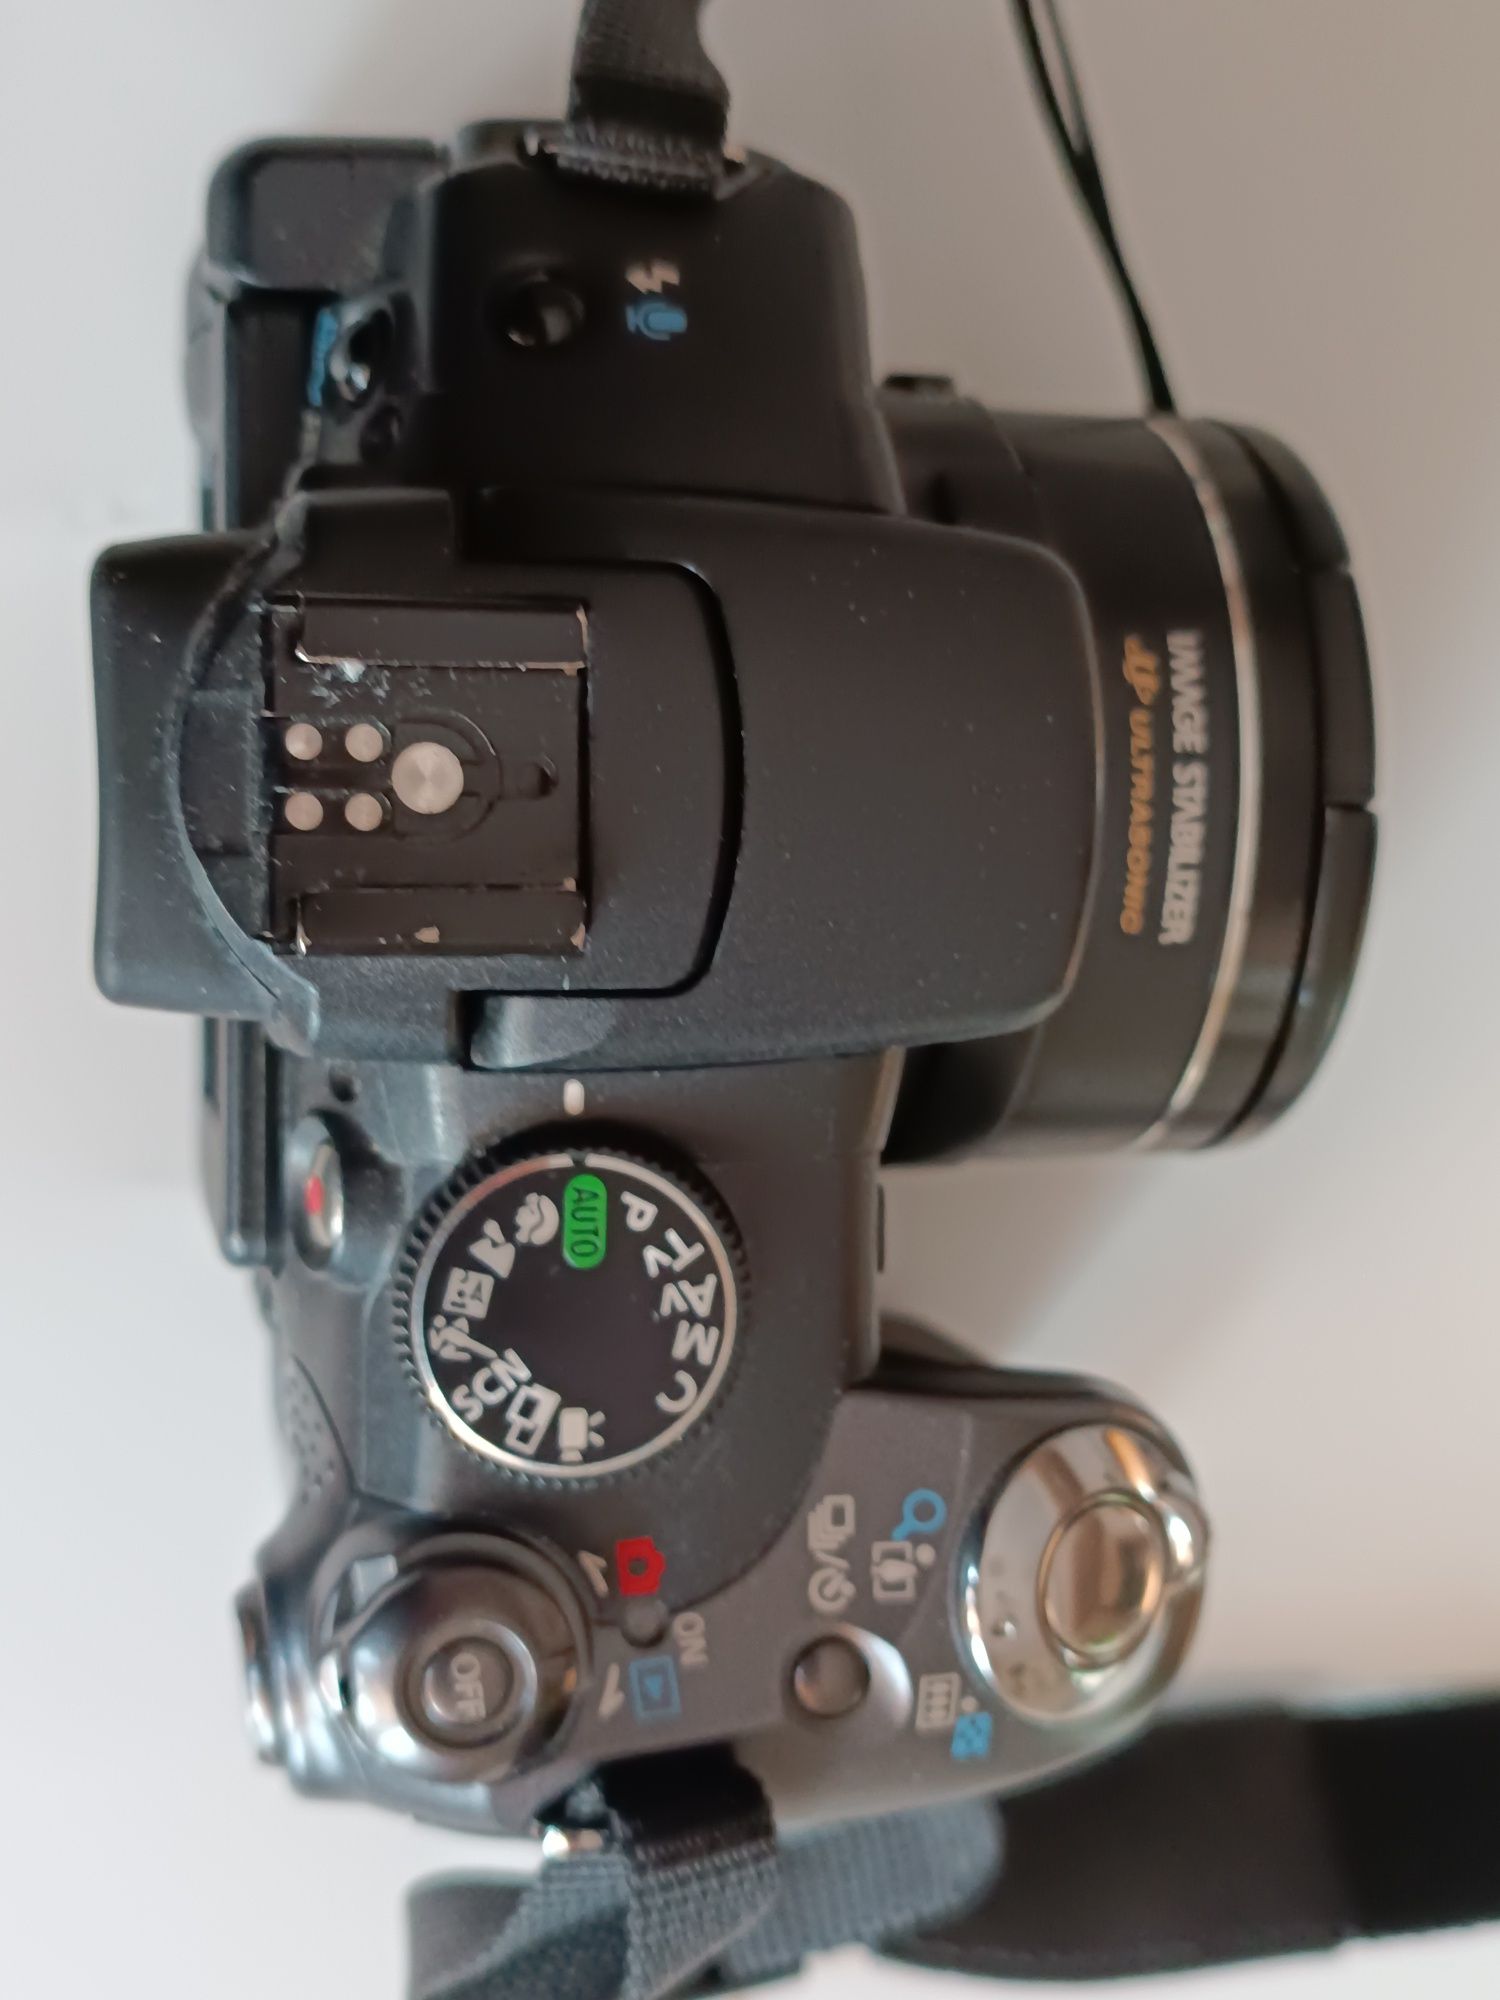 Aparat cyfrowy Canon Powershot S5 IS - Stan idealny